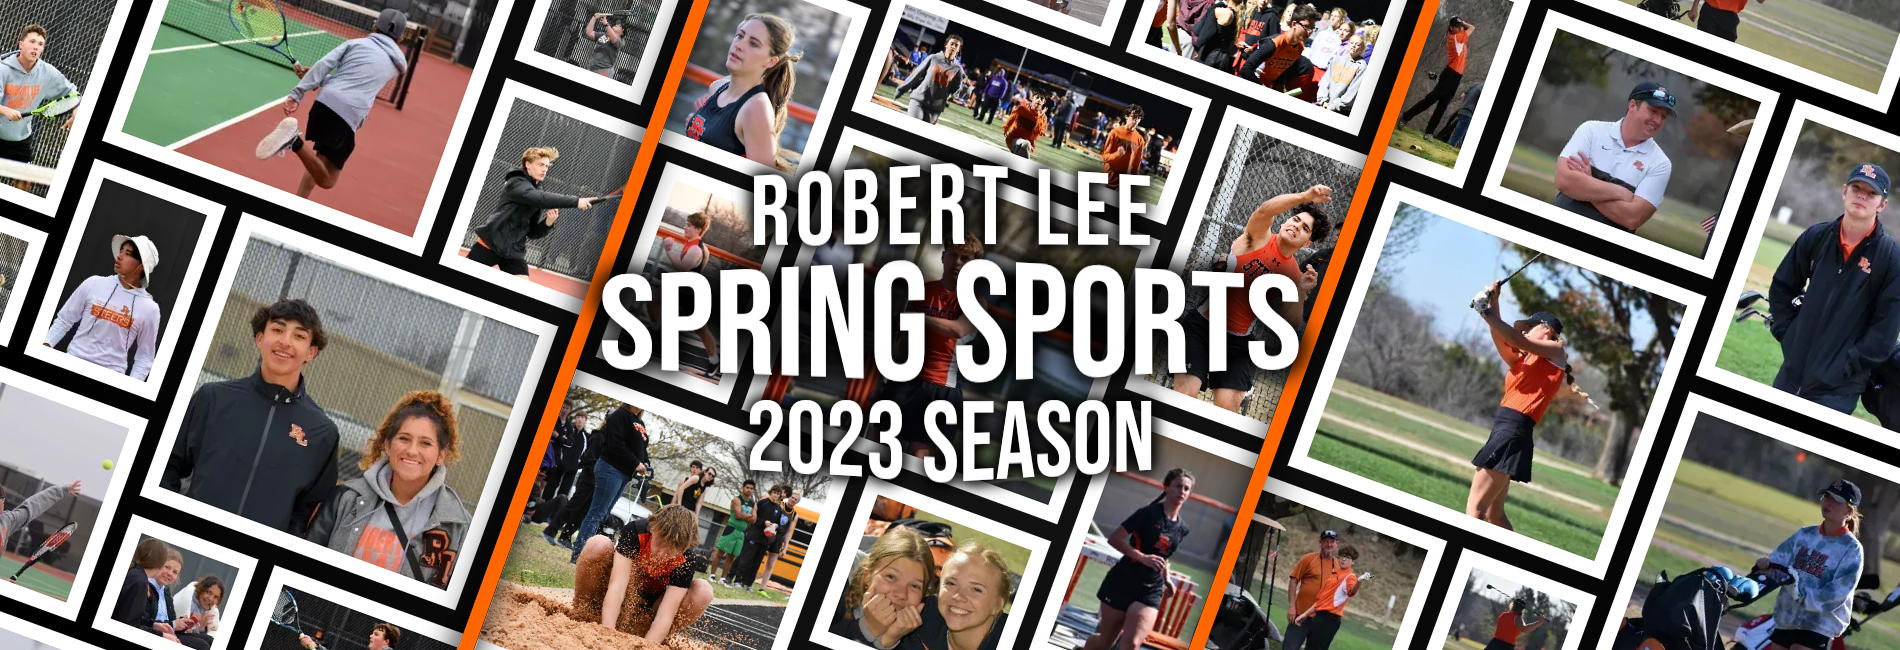 Spring Sports 2023 Season